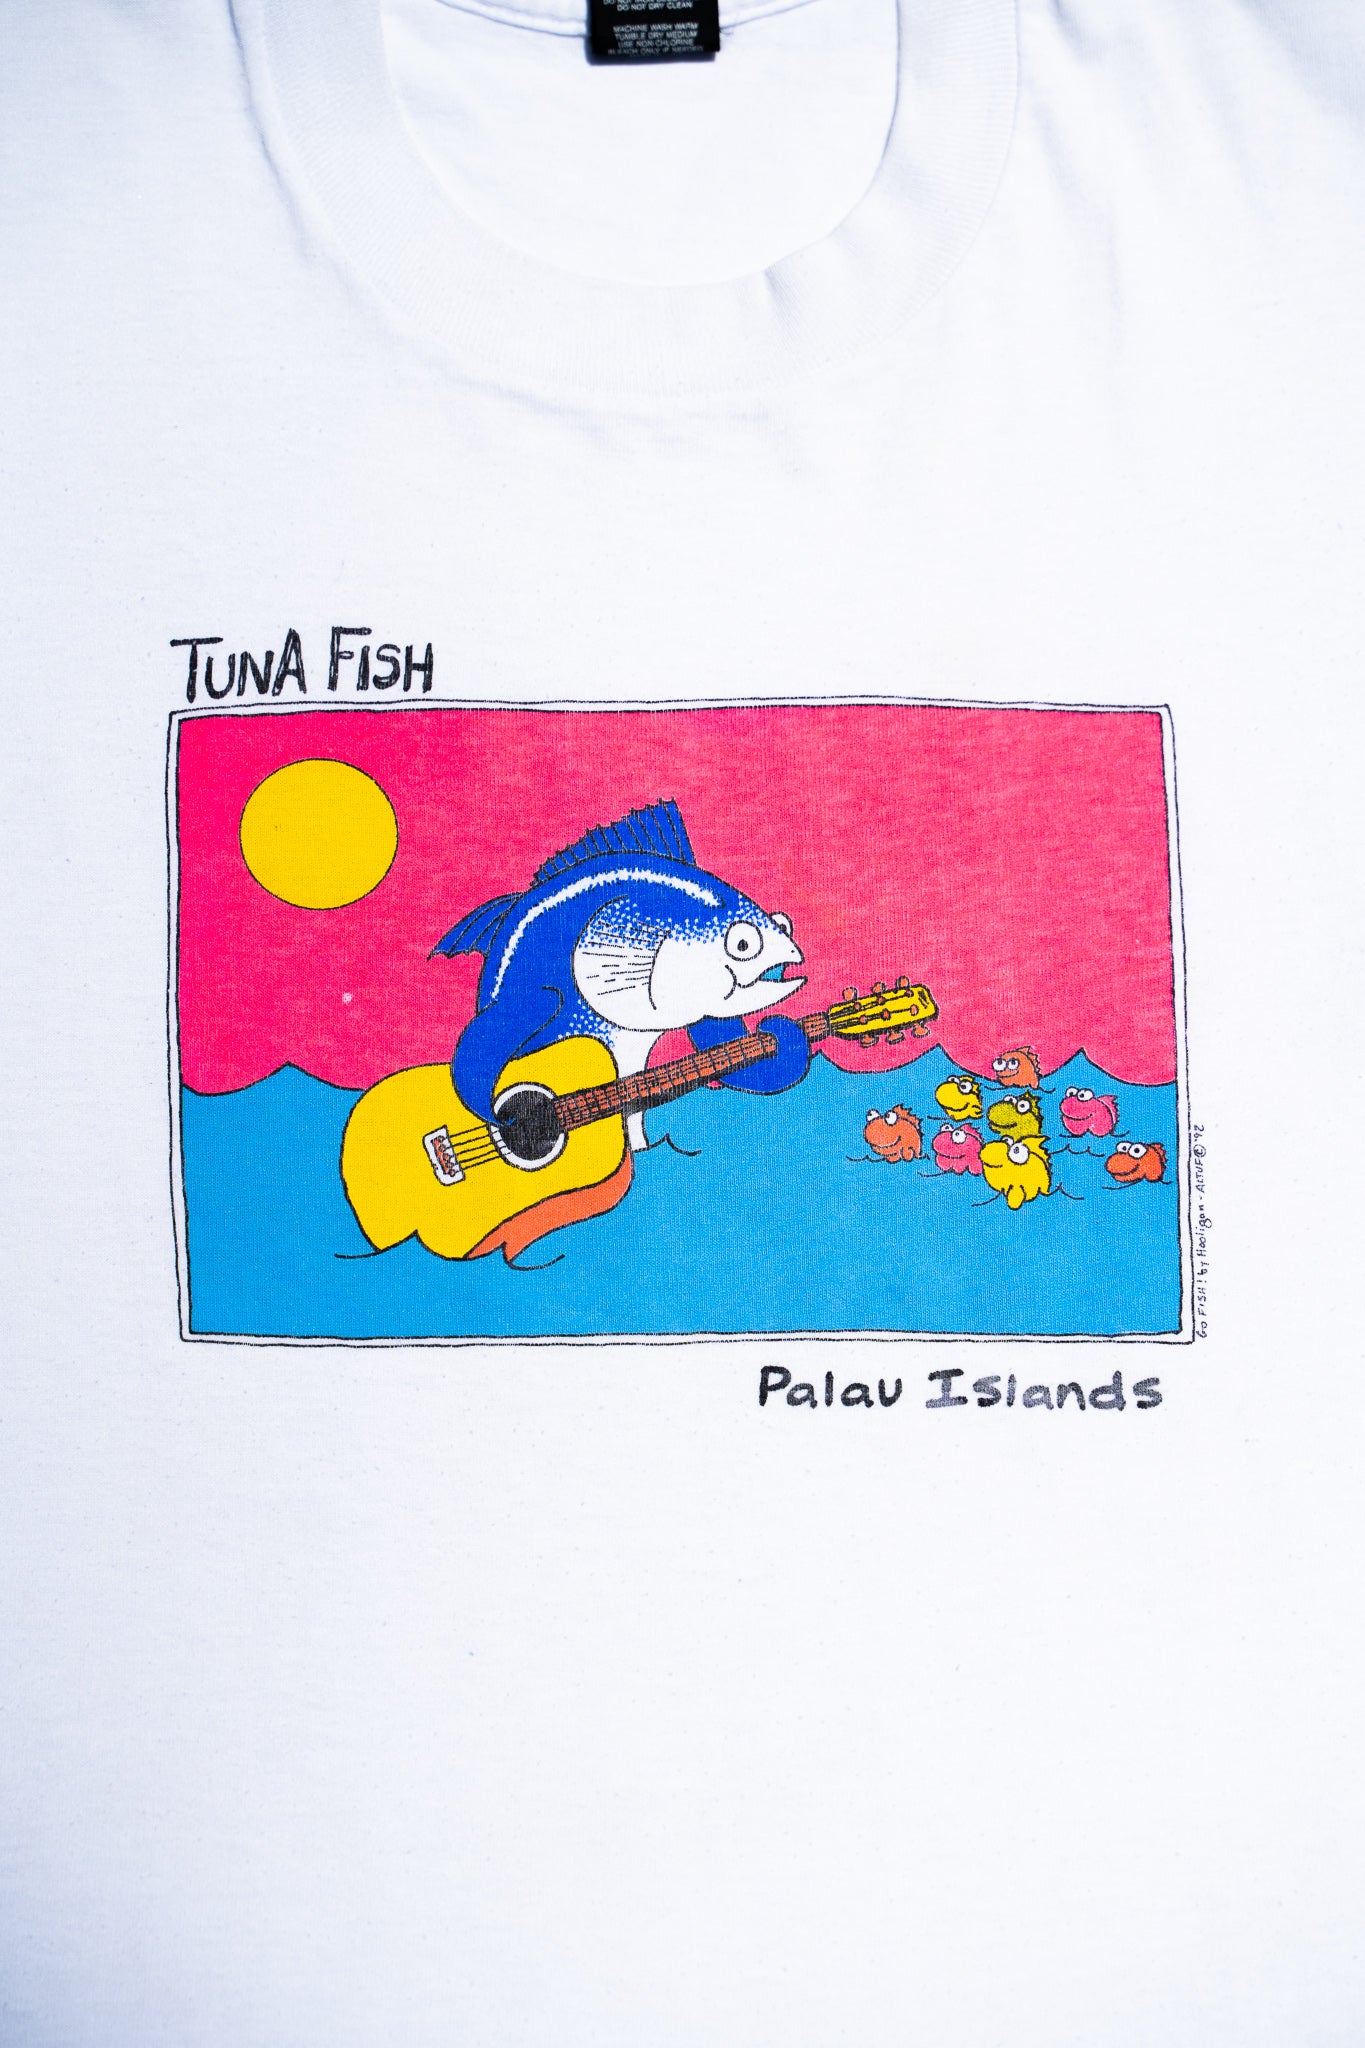 "TUNA FISH" Palau Island Souvenir T-shirt